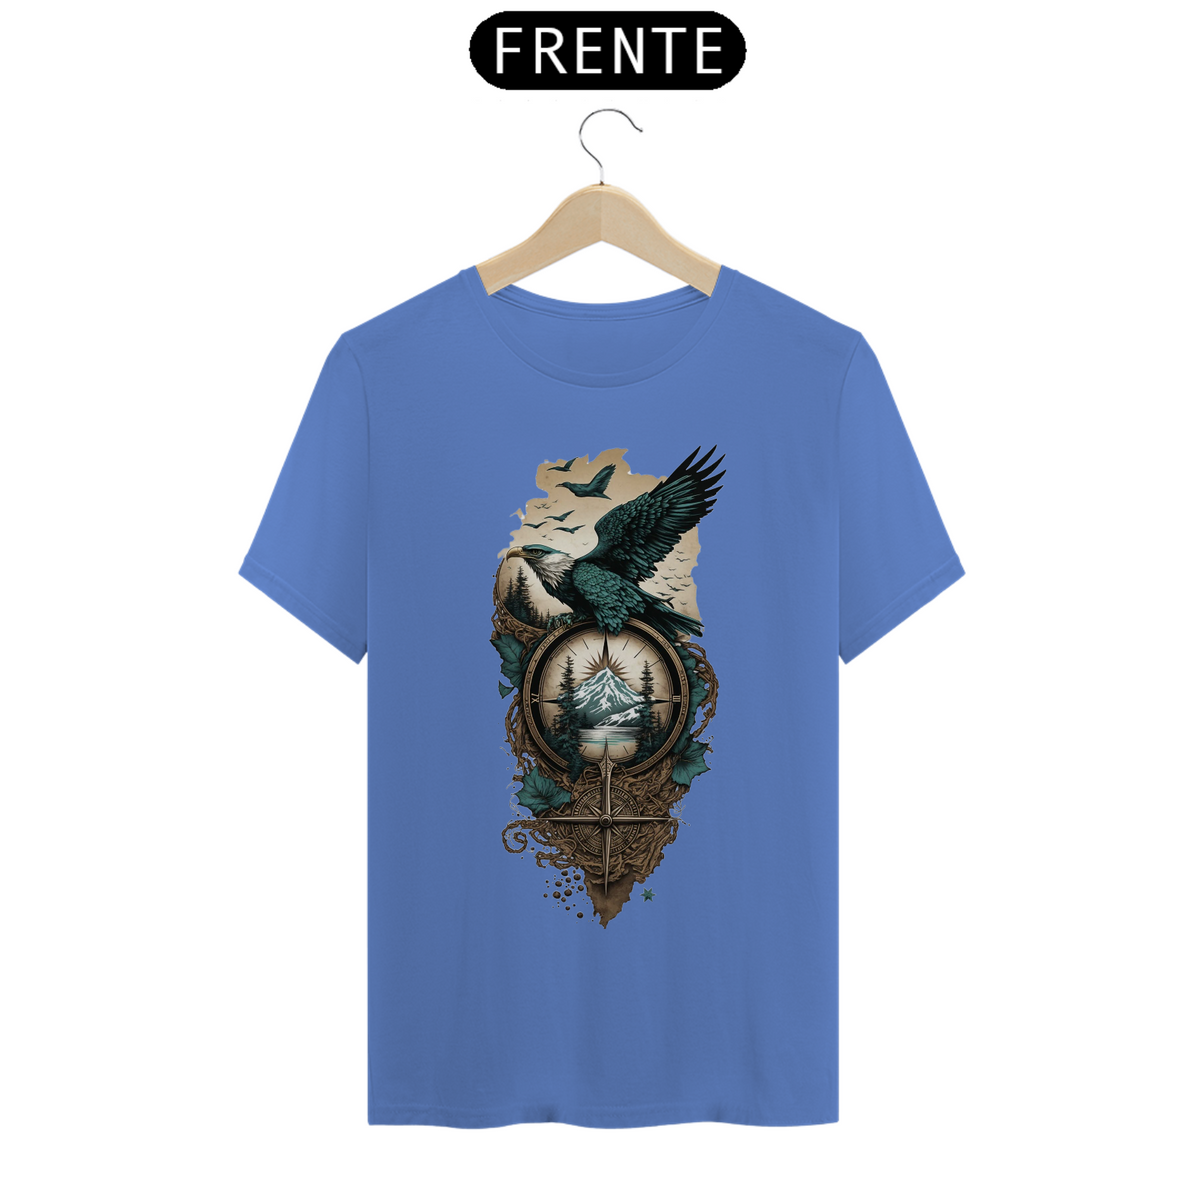 Nome do produto: Camiseta eagle 